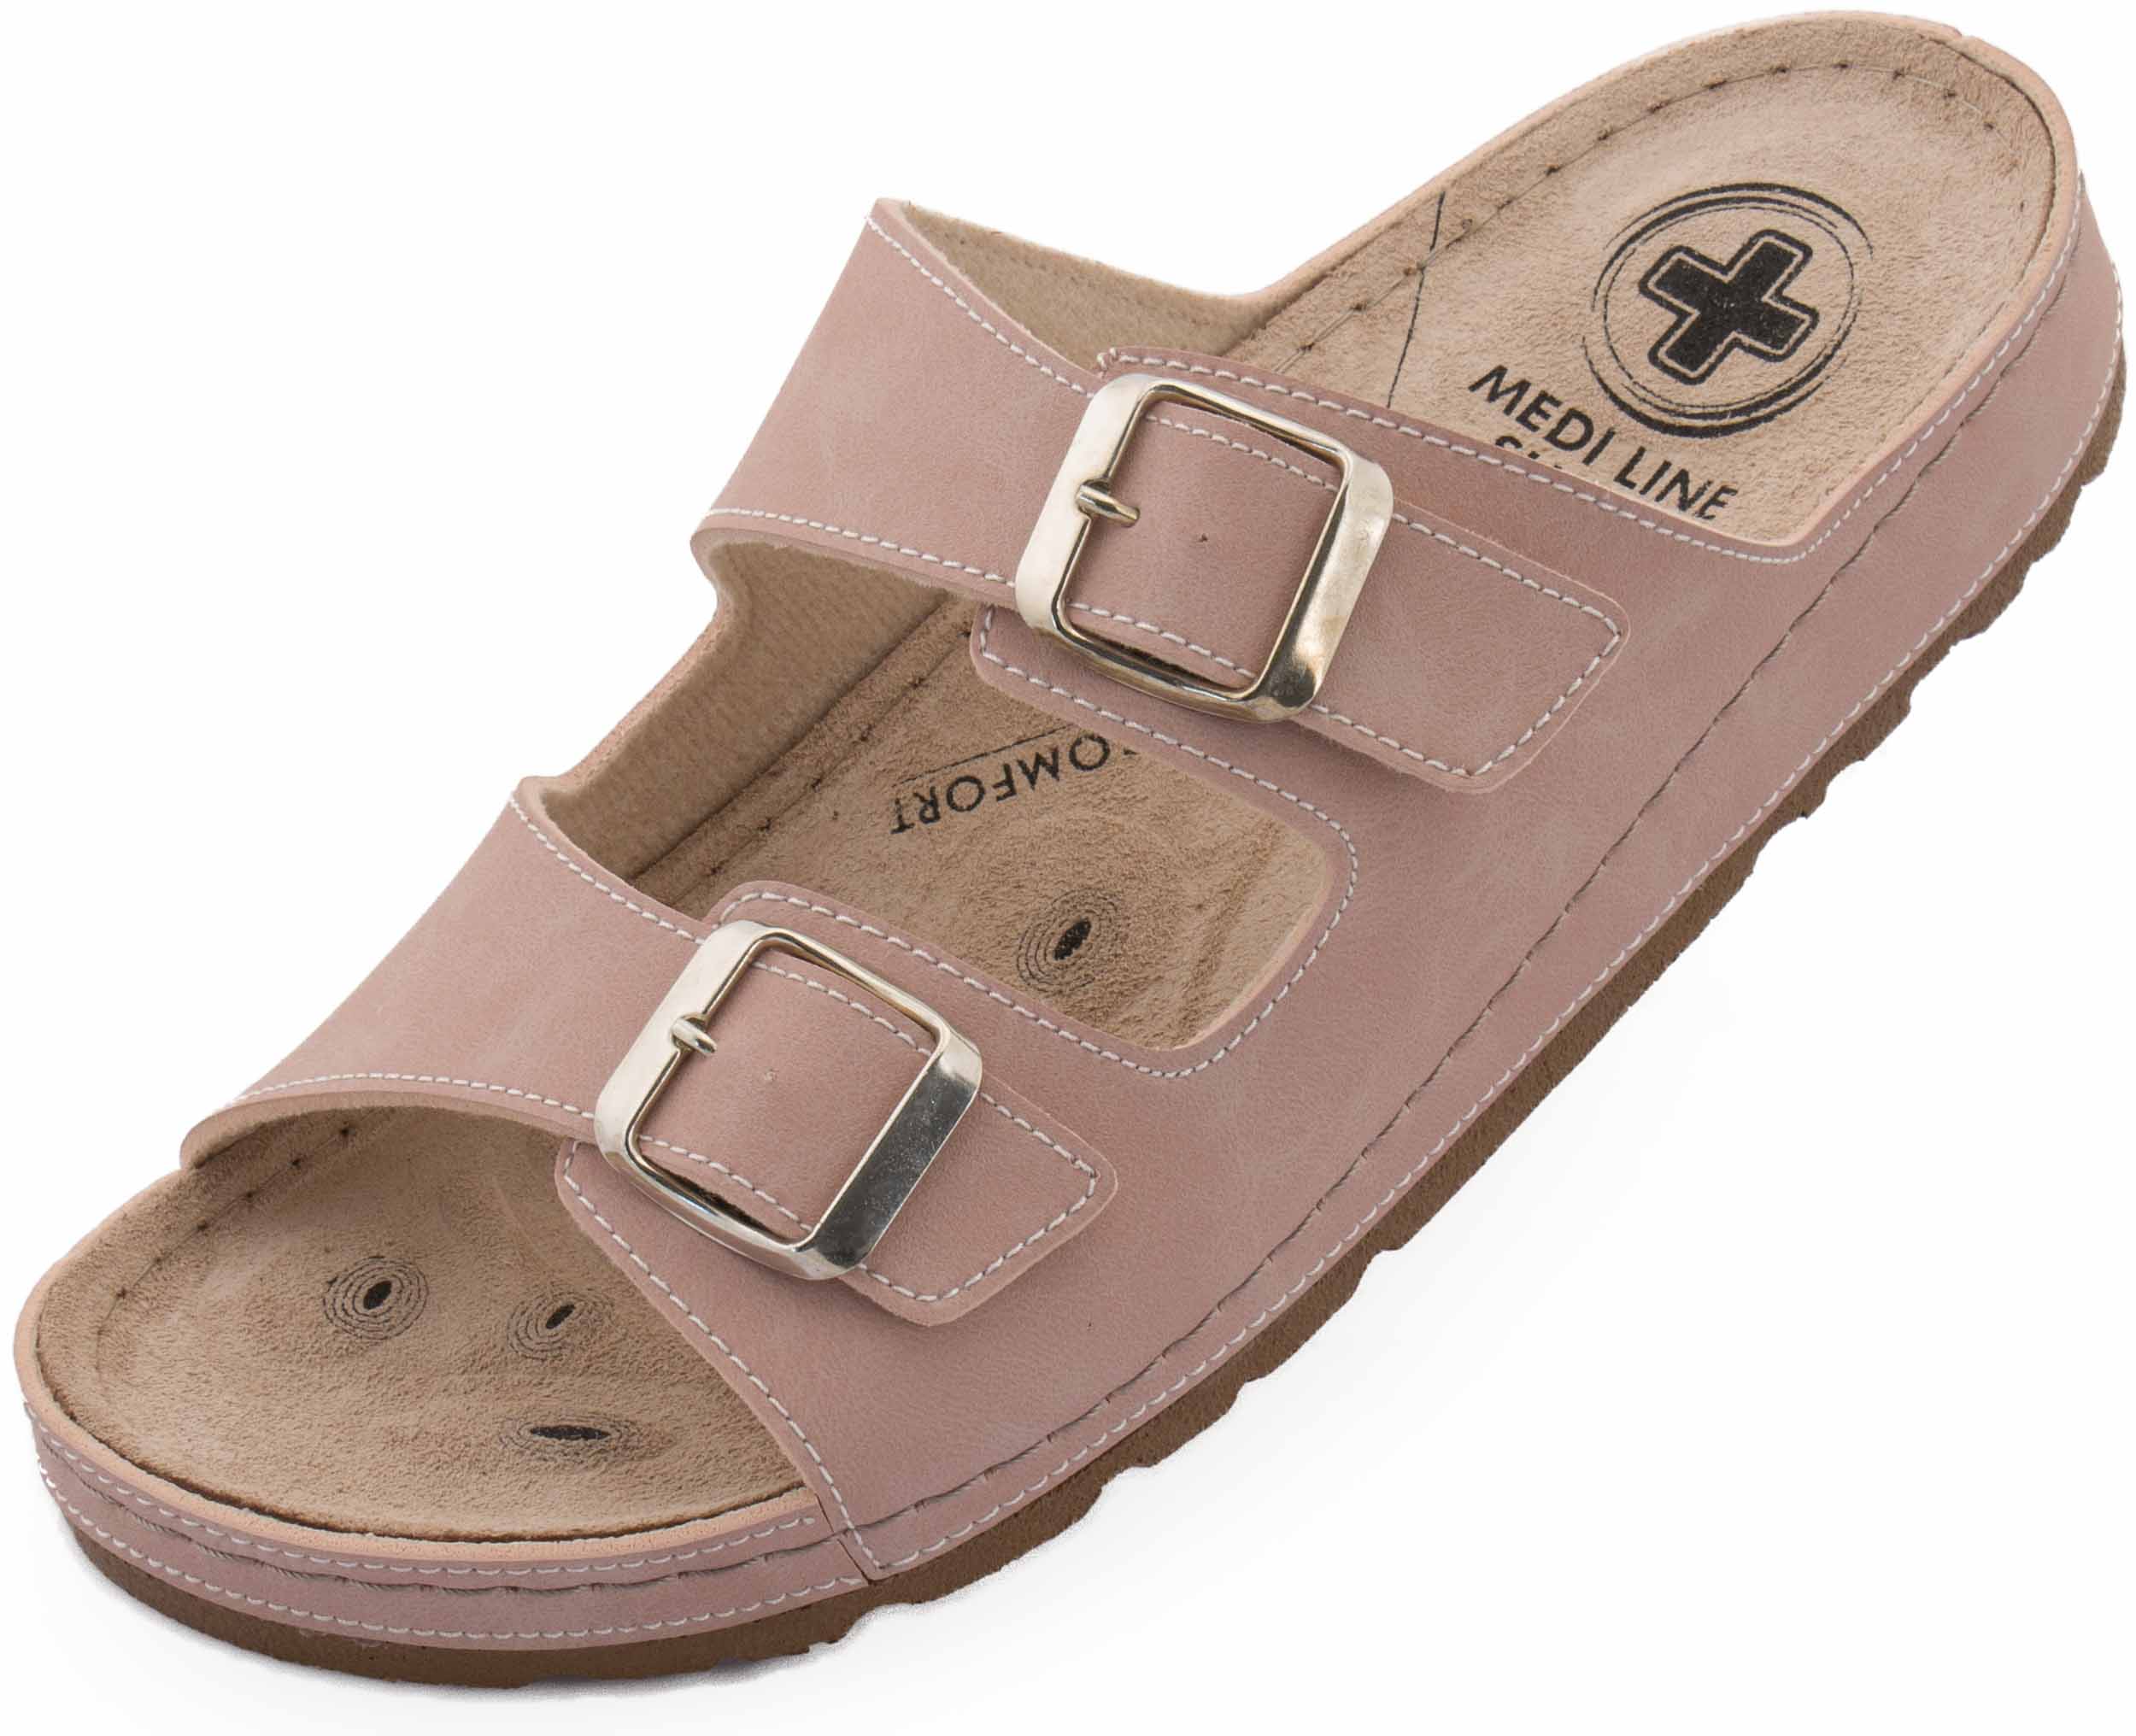 Dámské pantofle Medi Line S182.002 pink|36